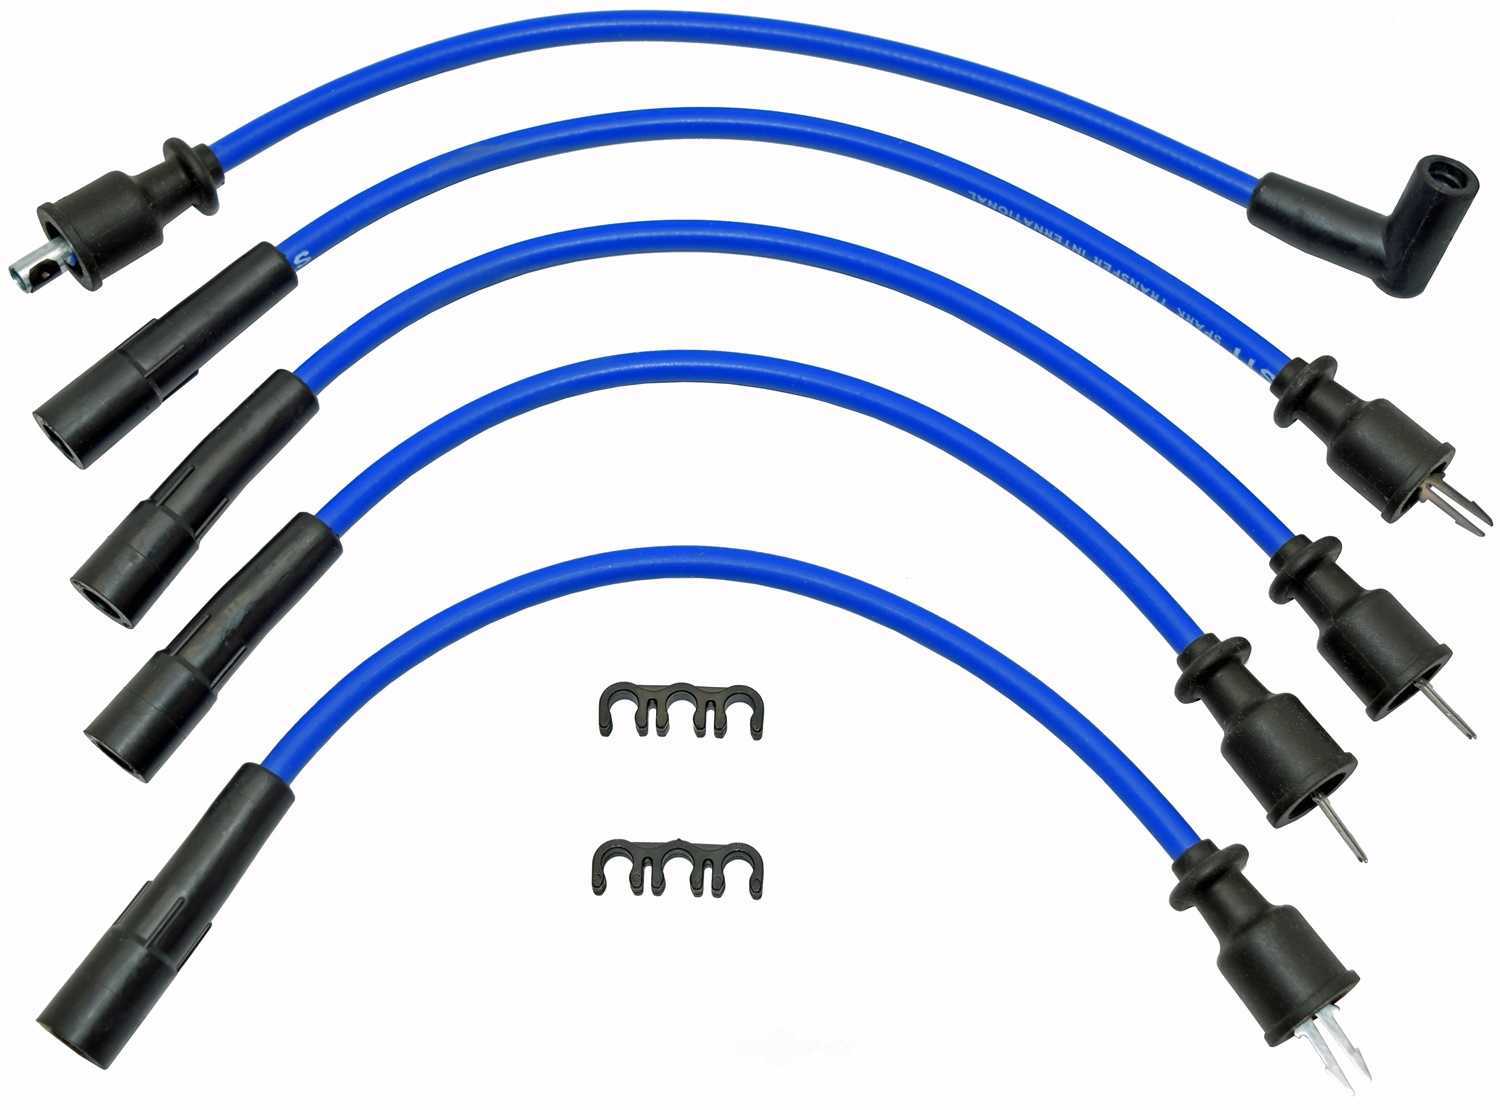 KARLYN/STI - Karlyn-STI Spark Plug Wire Set - KLY 495